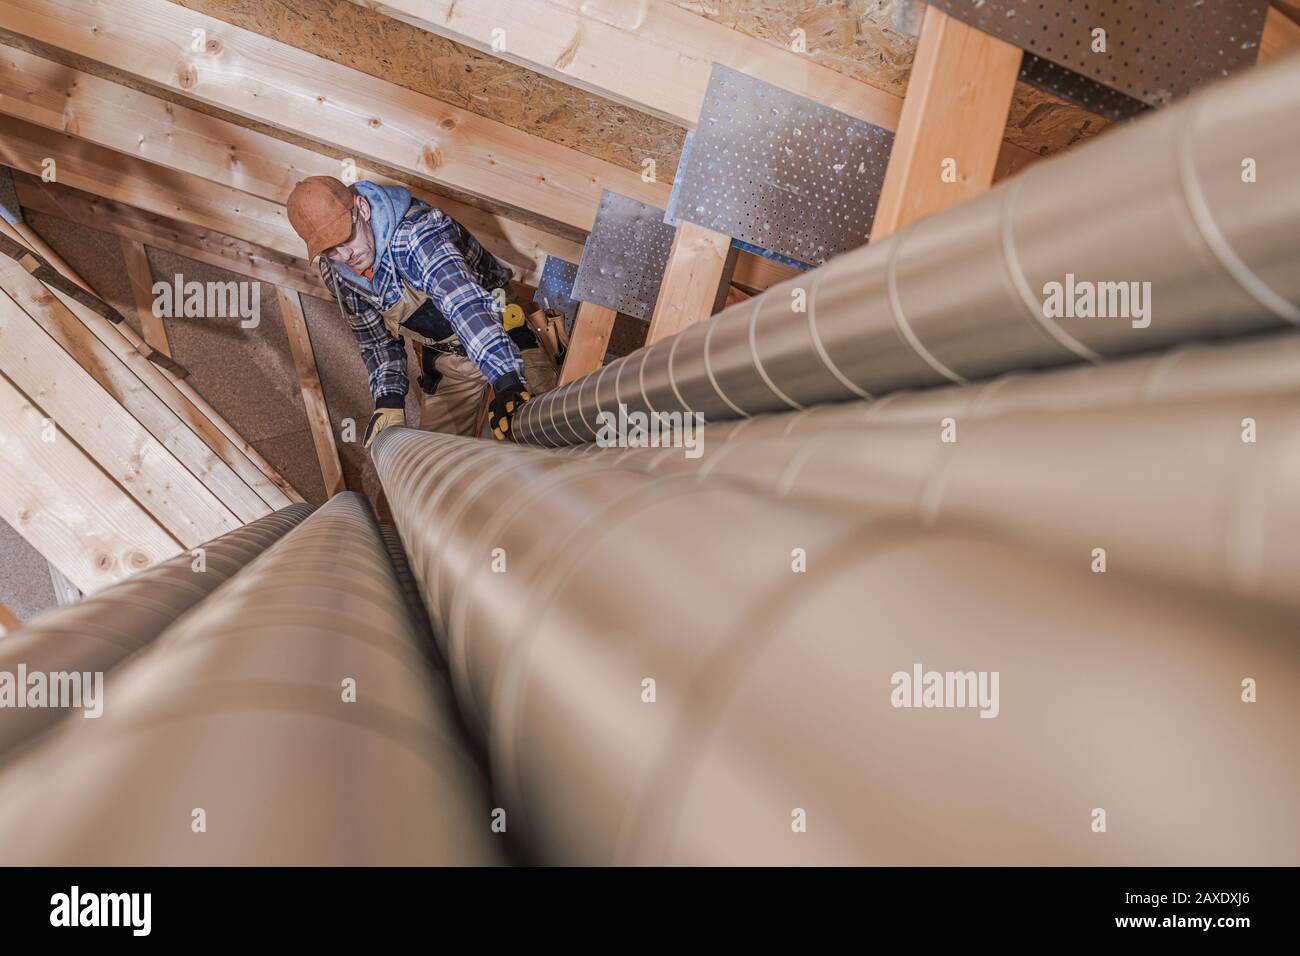 Residential Air Ventilation Pipeline Building. Worker Preparing Metal Air Vent Pipes. Stock Photo